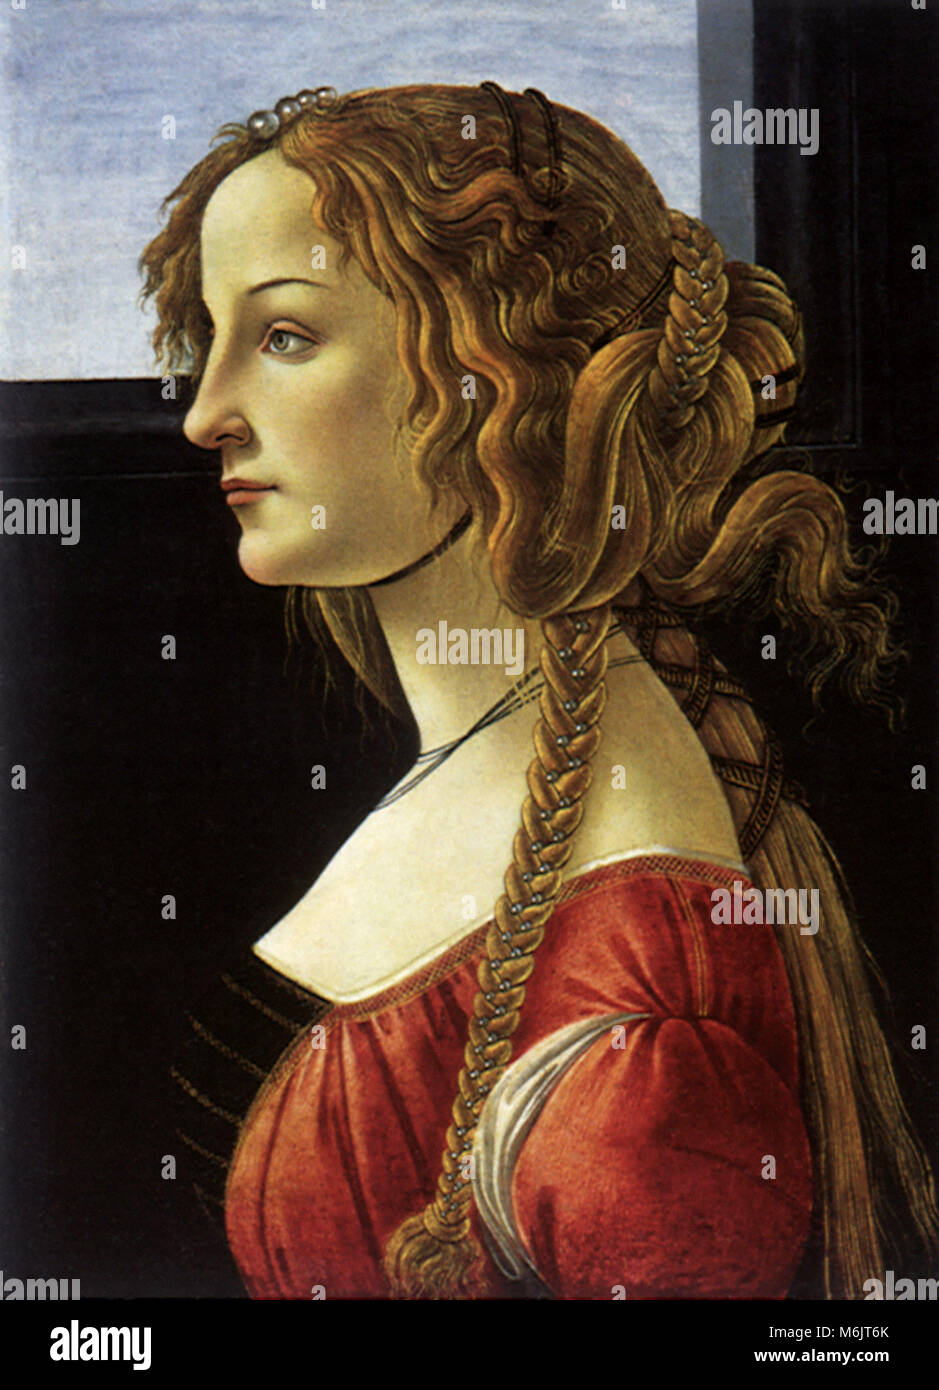 Perfil retrato de una mujer joven, Botticelli, Studio, de 1485. Foto de stock